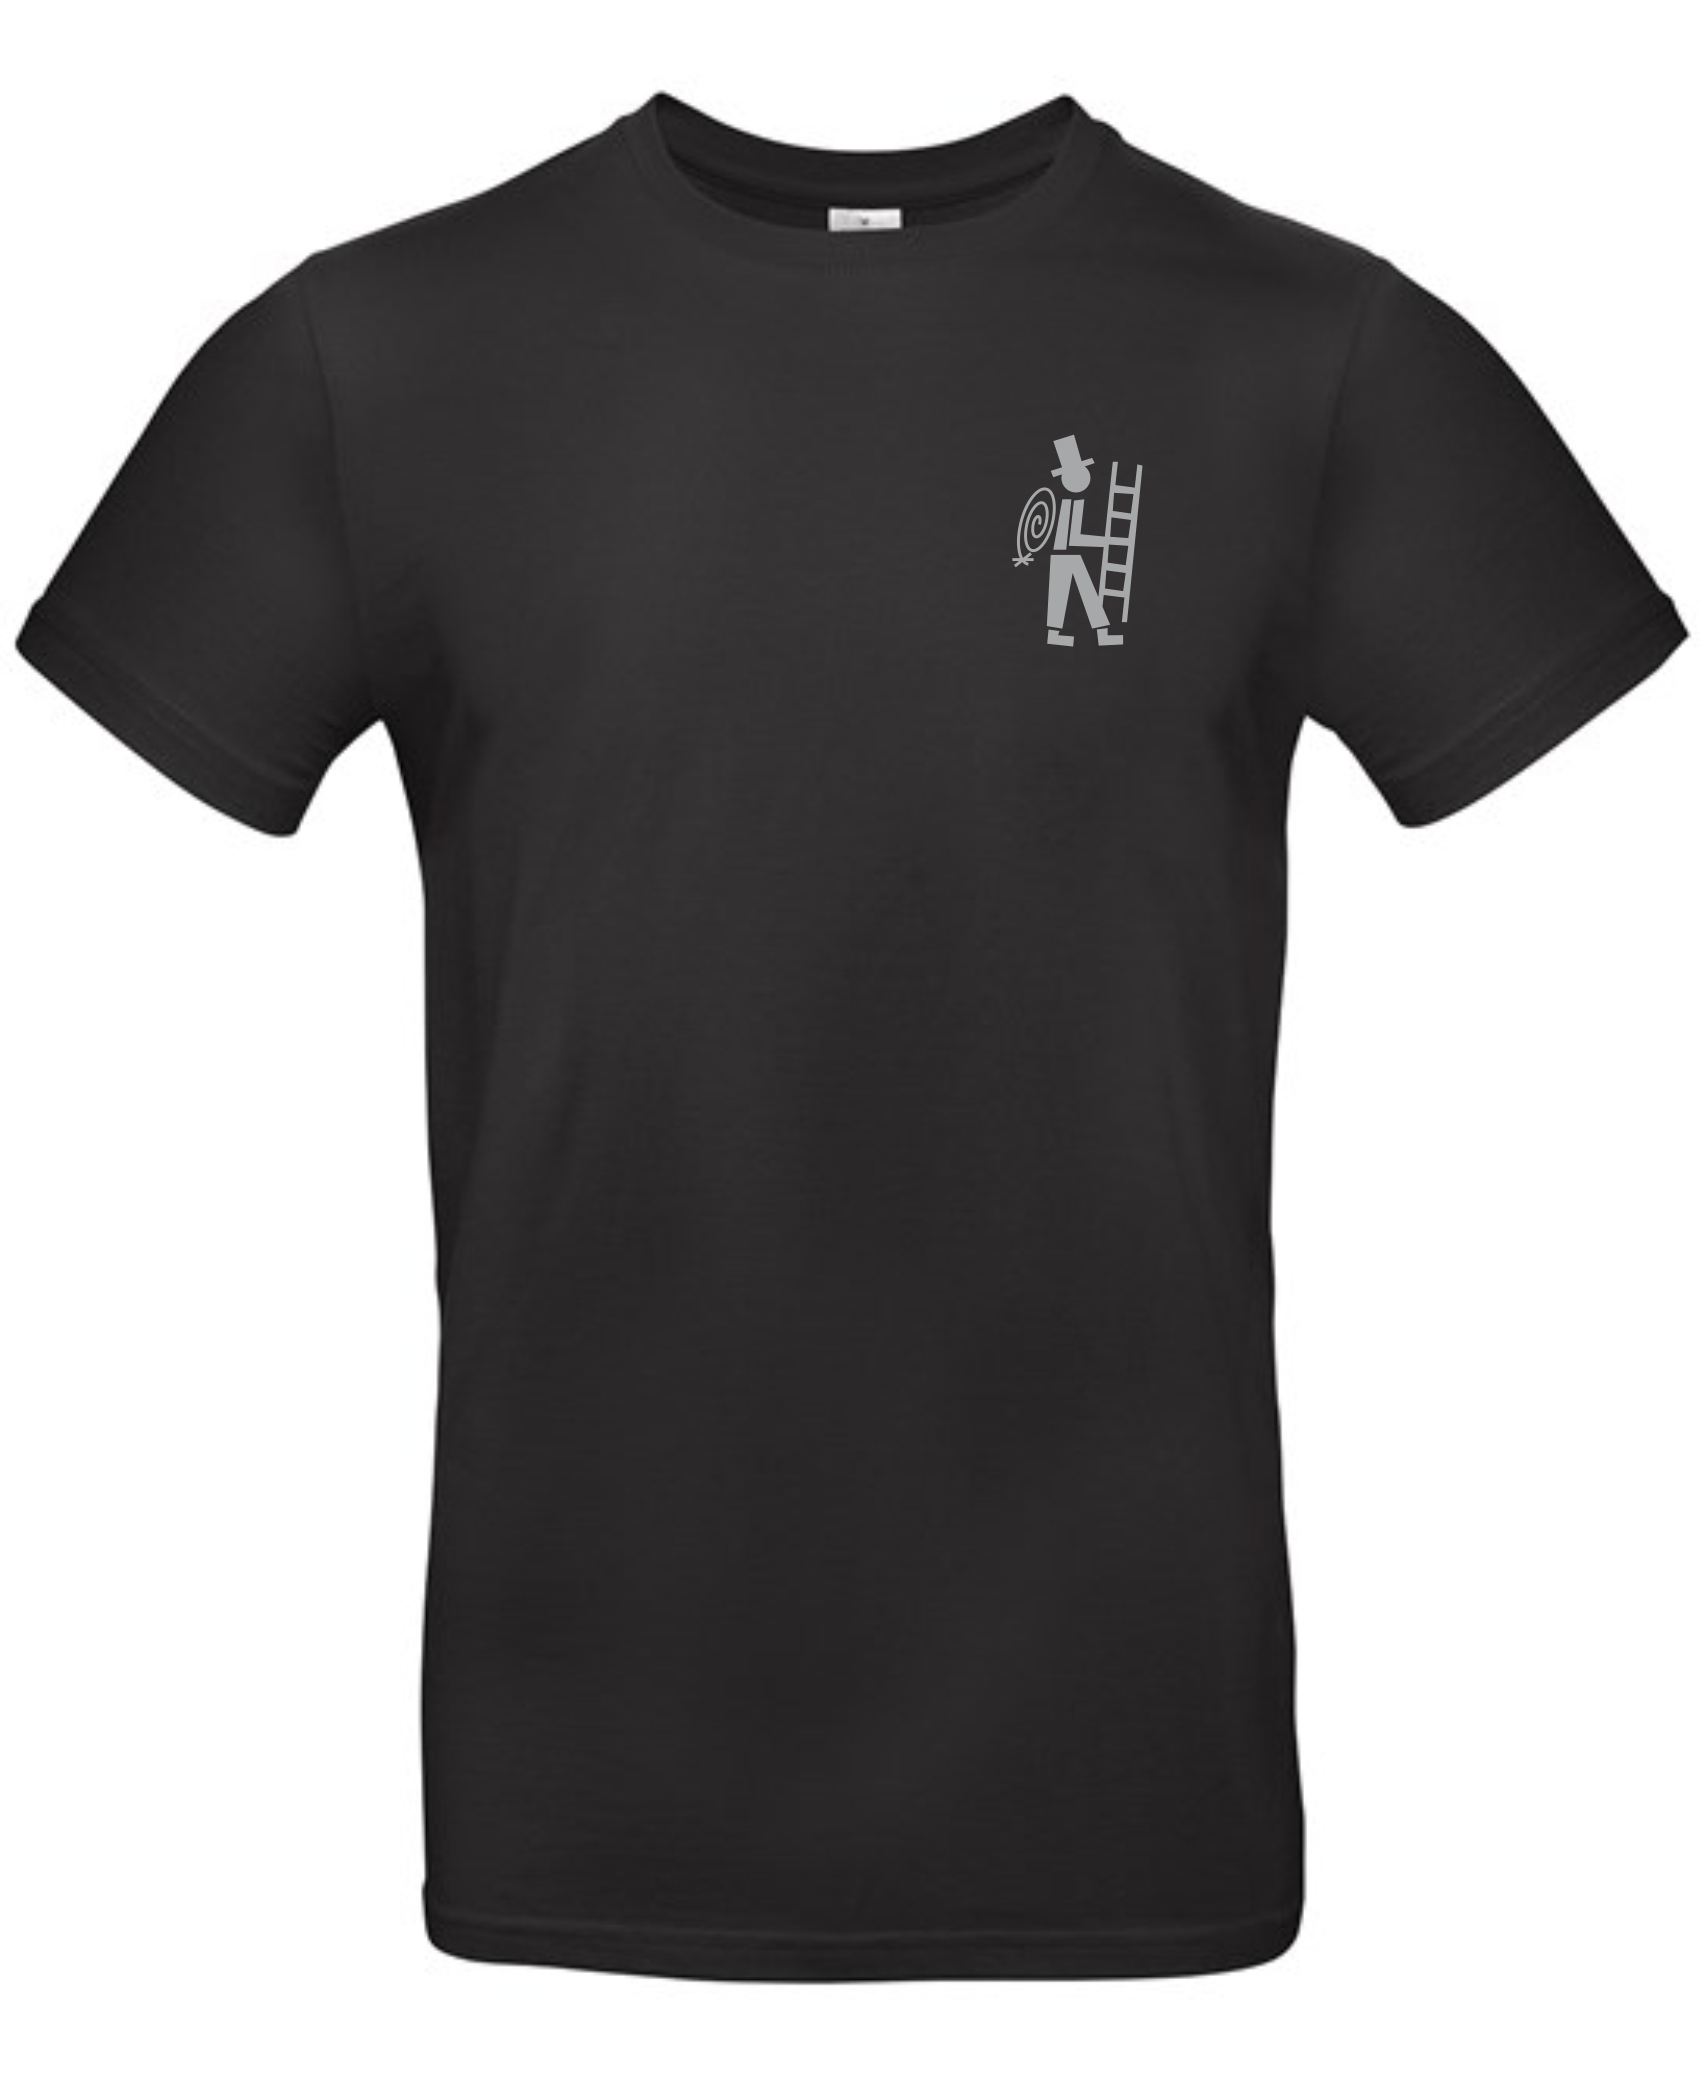 T-Shirt mit Schorni 2 in silbergrau